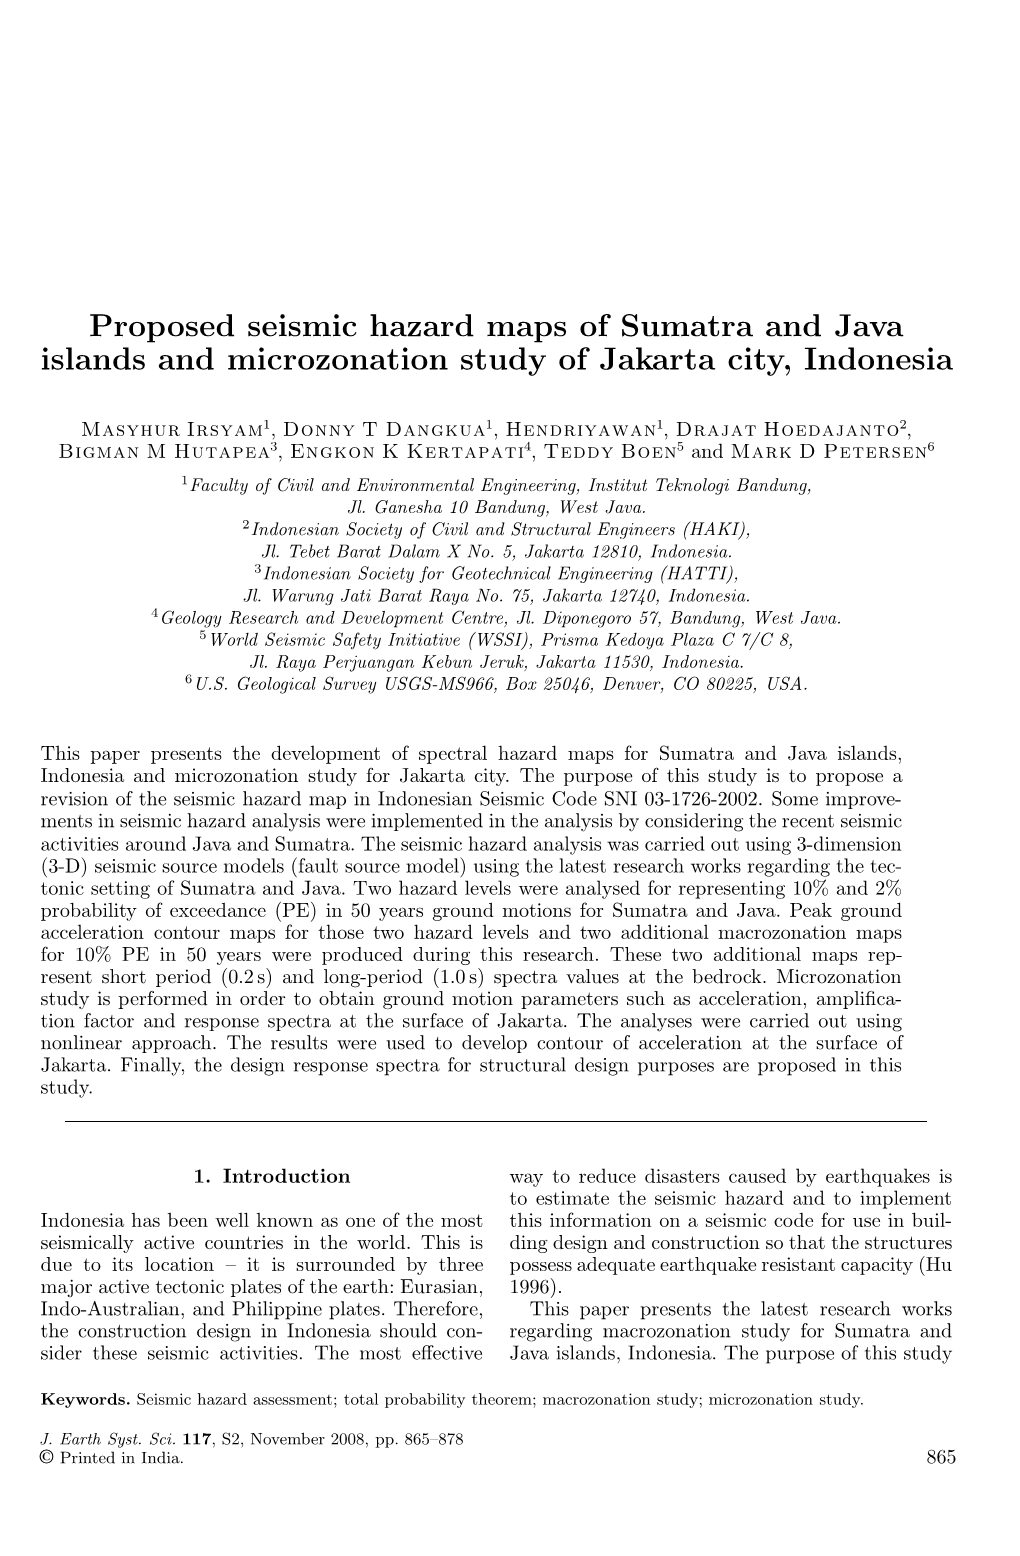 Proposed Seismic Hazard Maps of Sumatra and Java Islands and Microzonation Study of Jakarta City, Indonesia